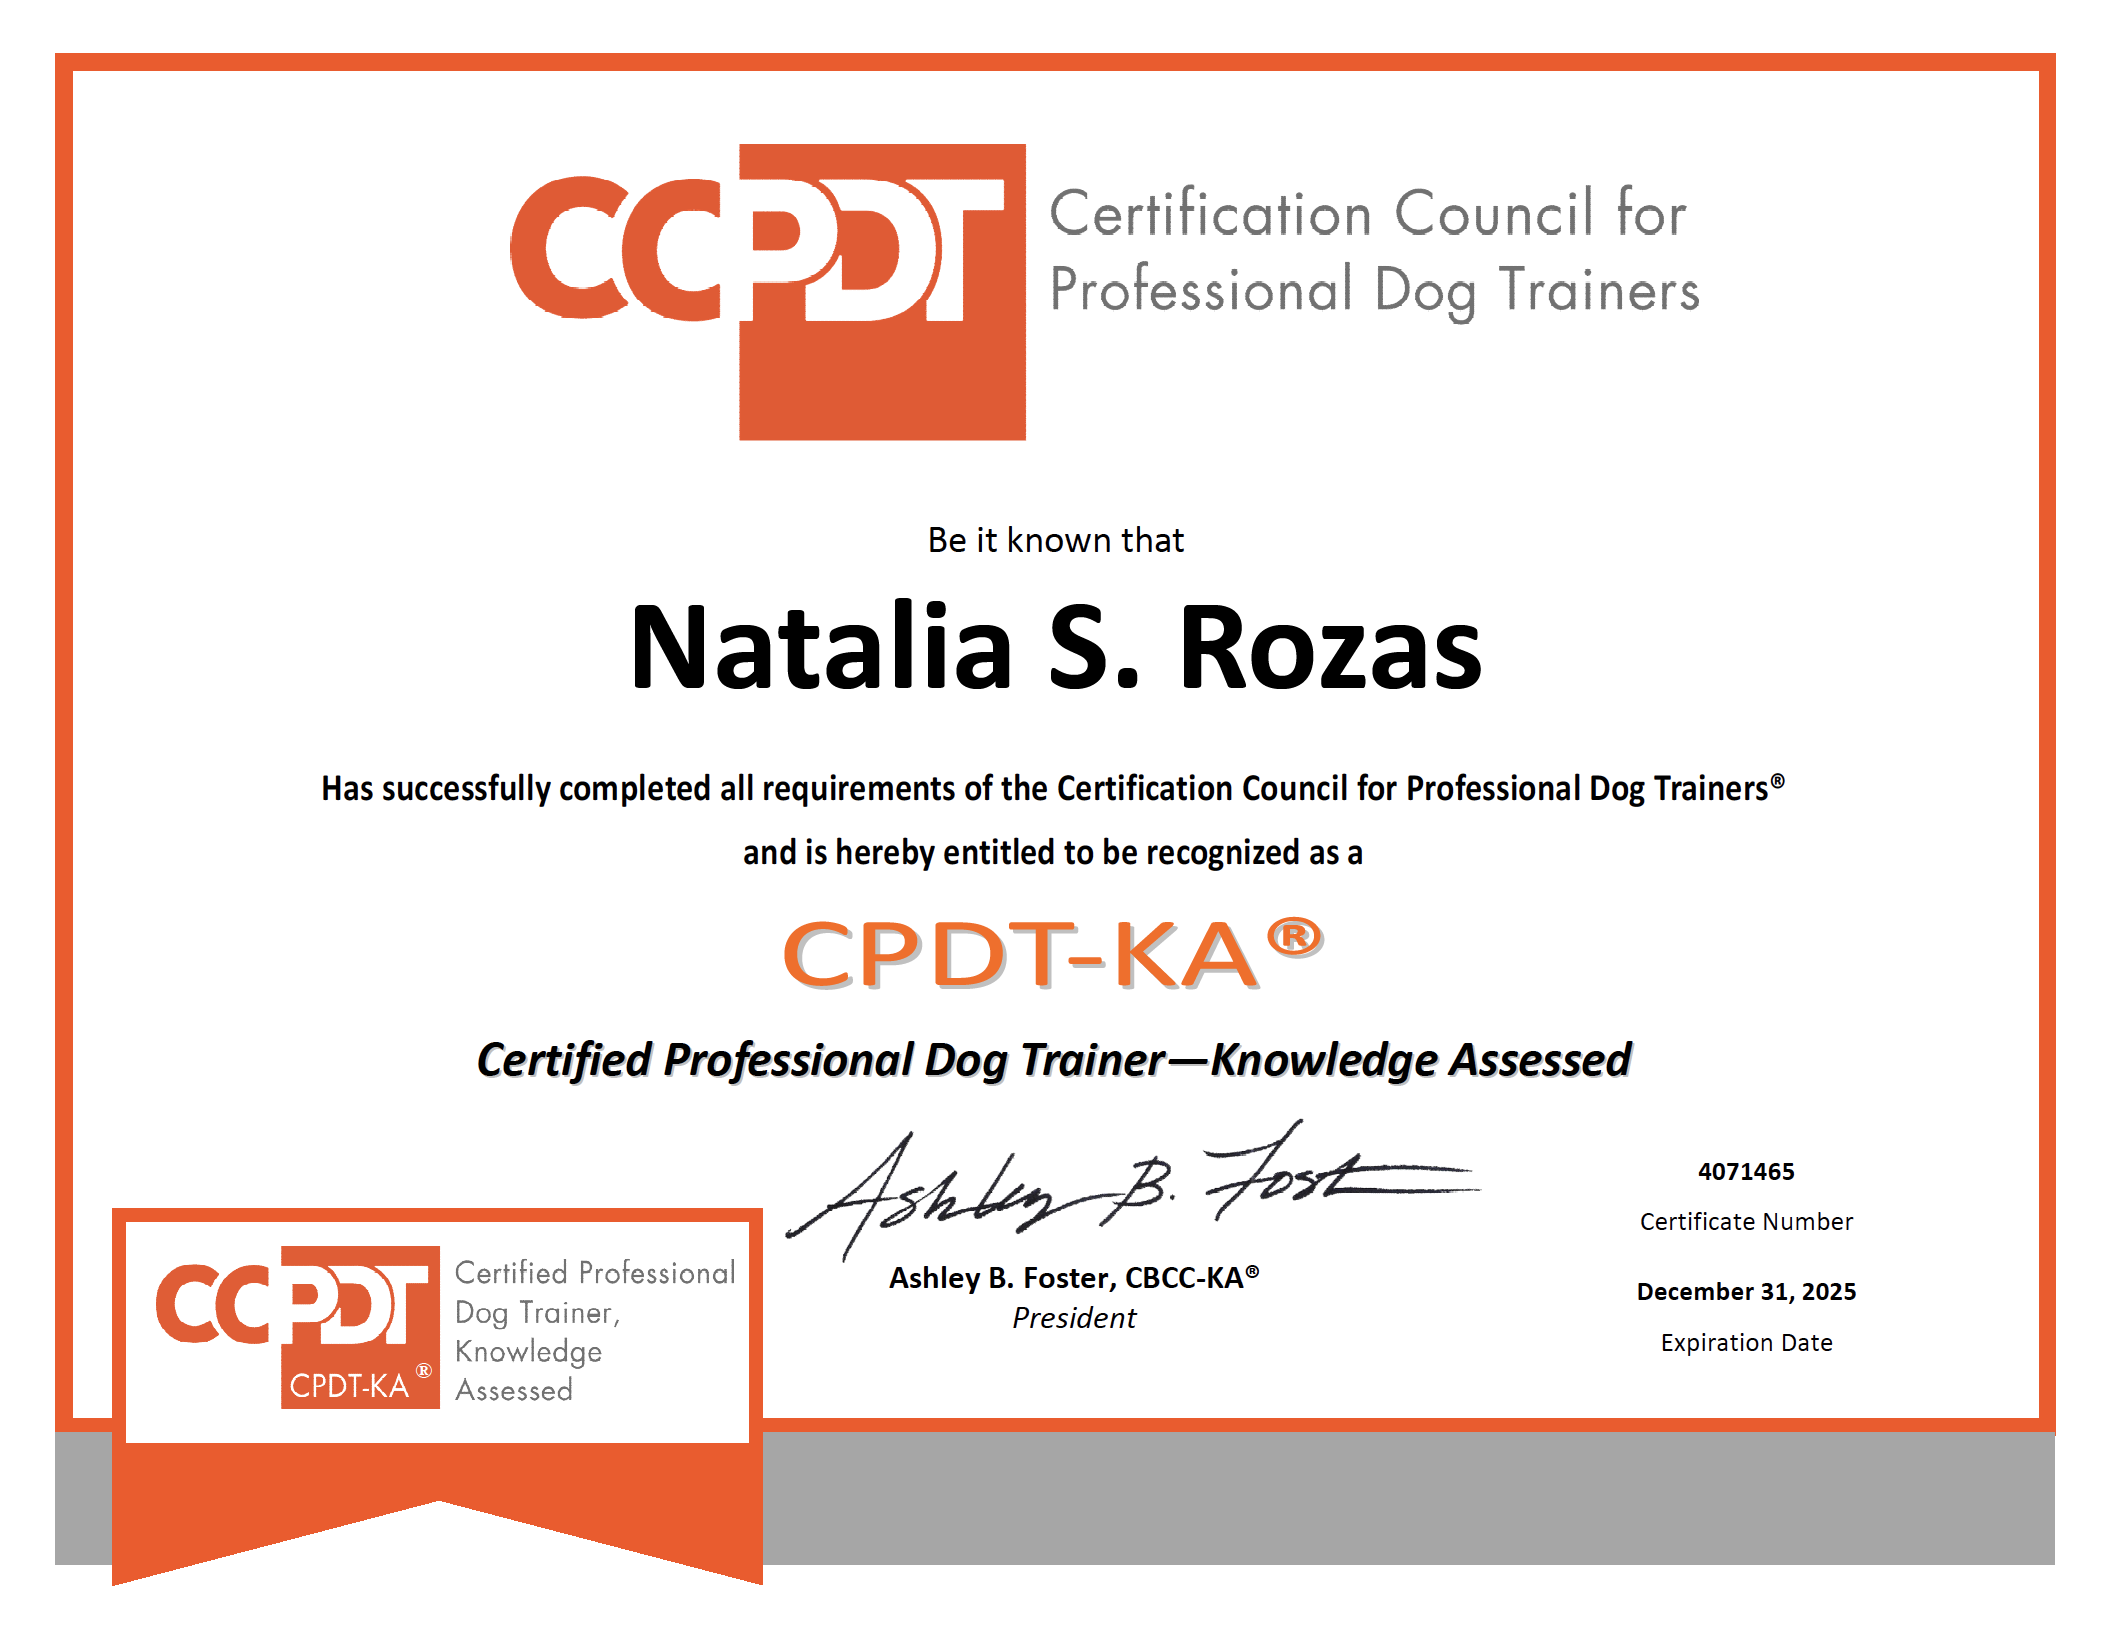 CCPDT diploma 2025 expiration